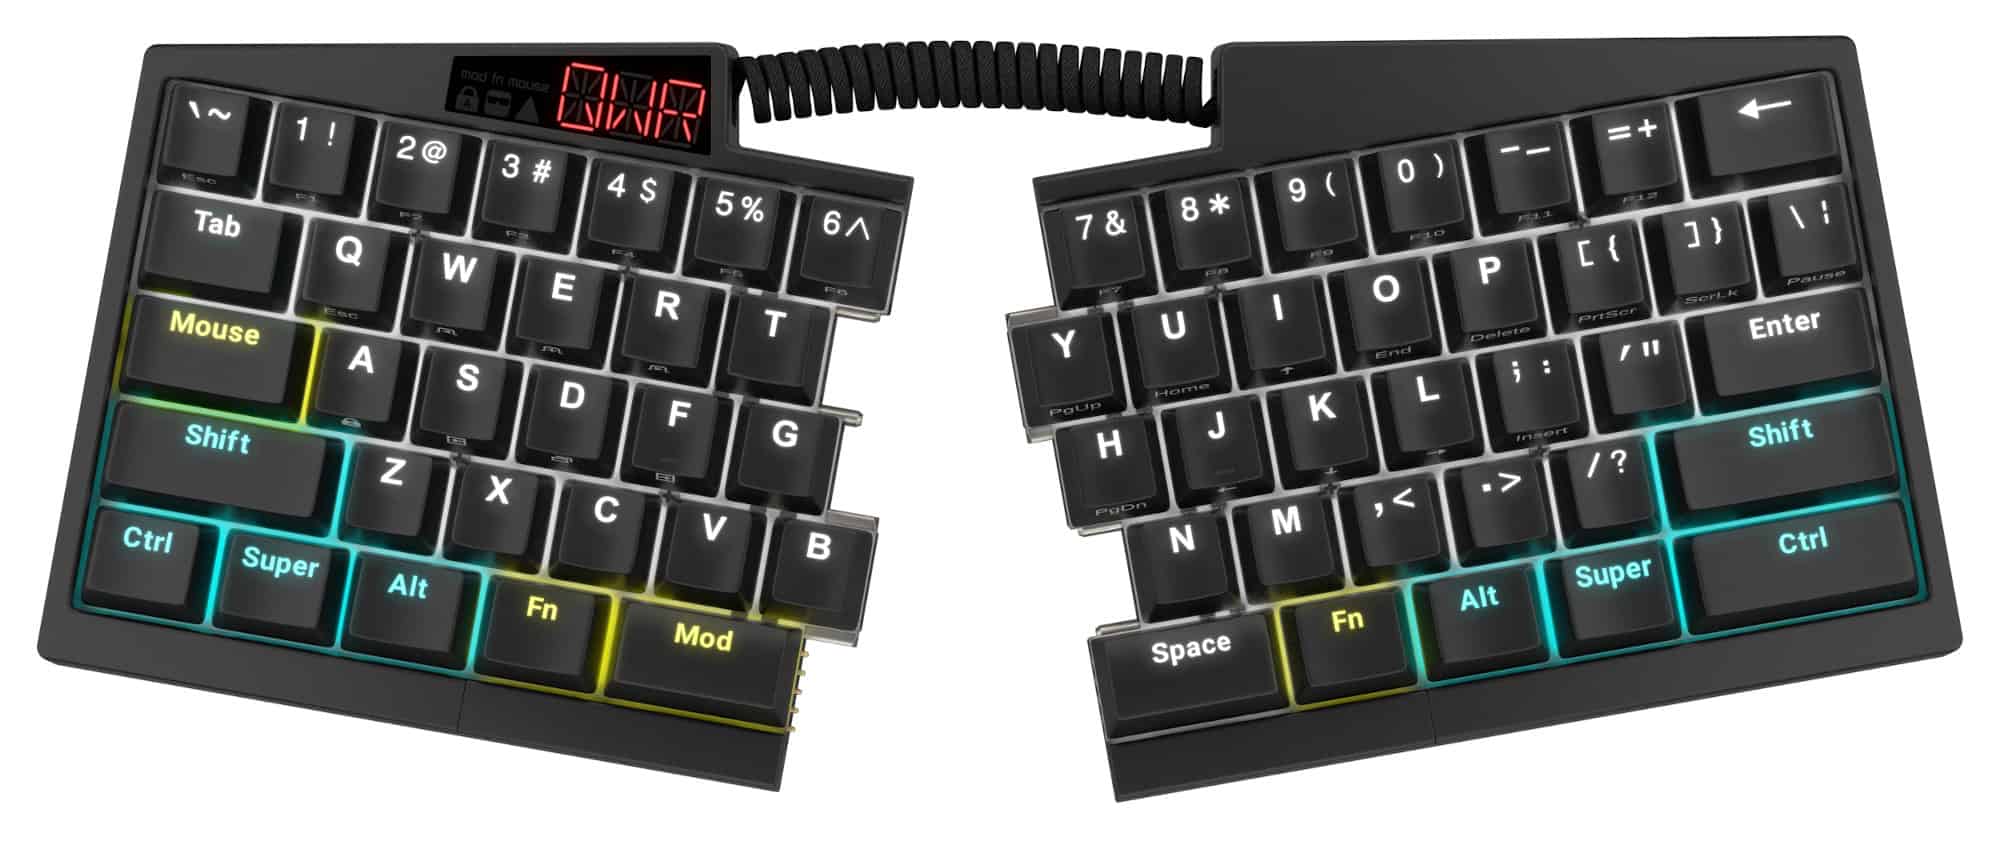 UHK 60 v2 – Ultimate Hacking Keyboard